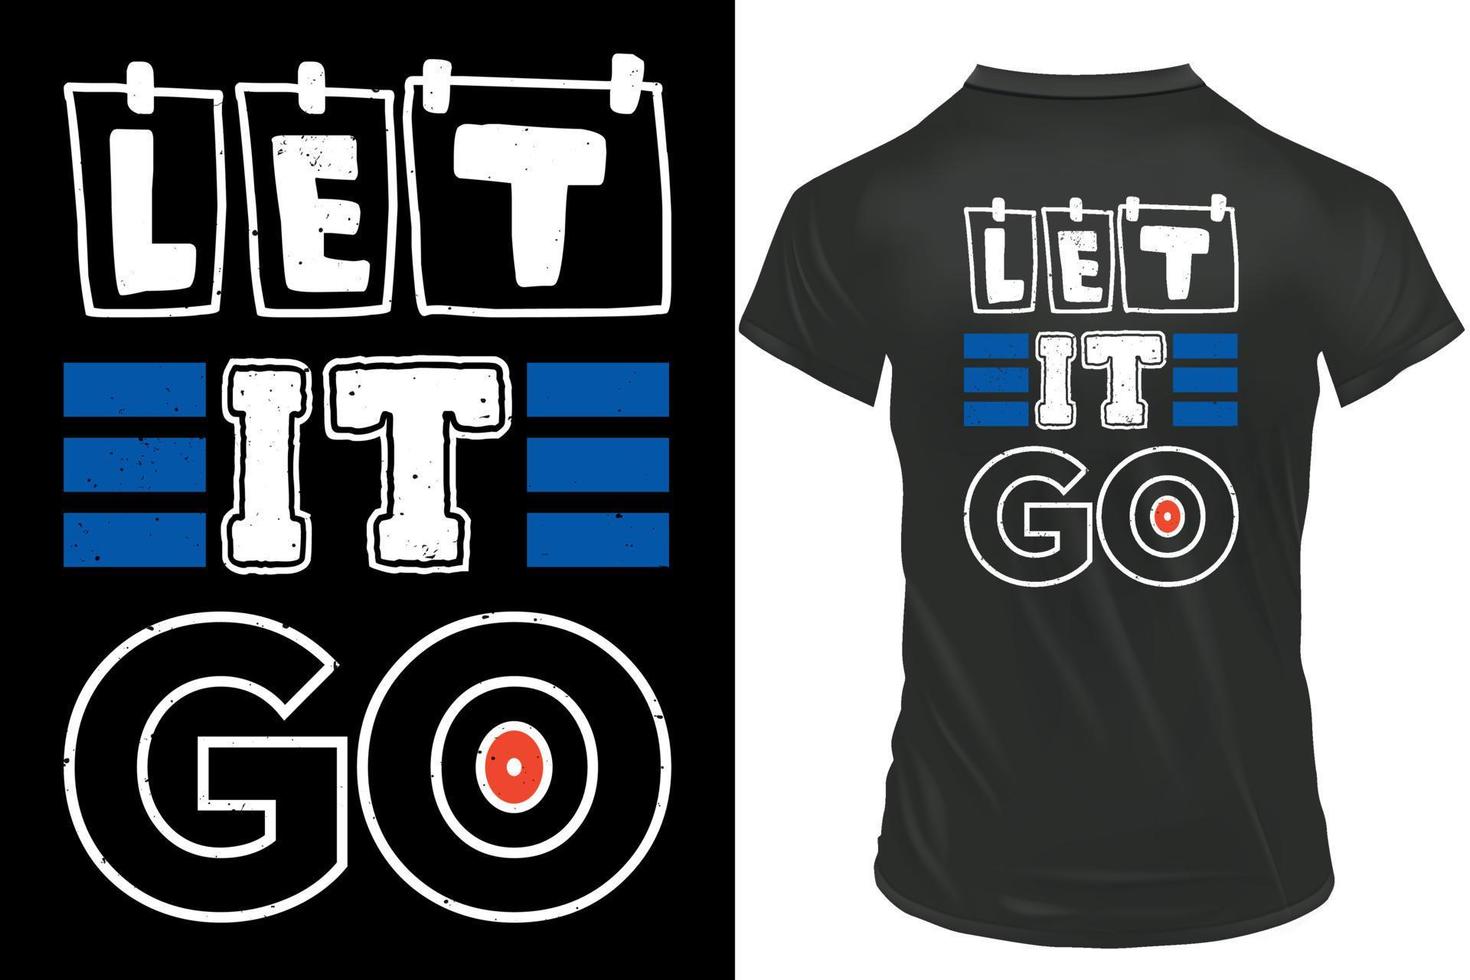 Let it GO typography t-shirt design. Vector illustration design.